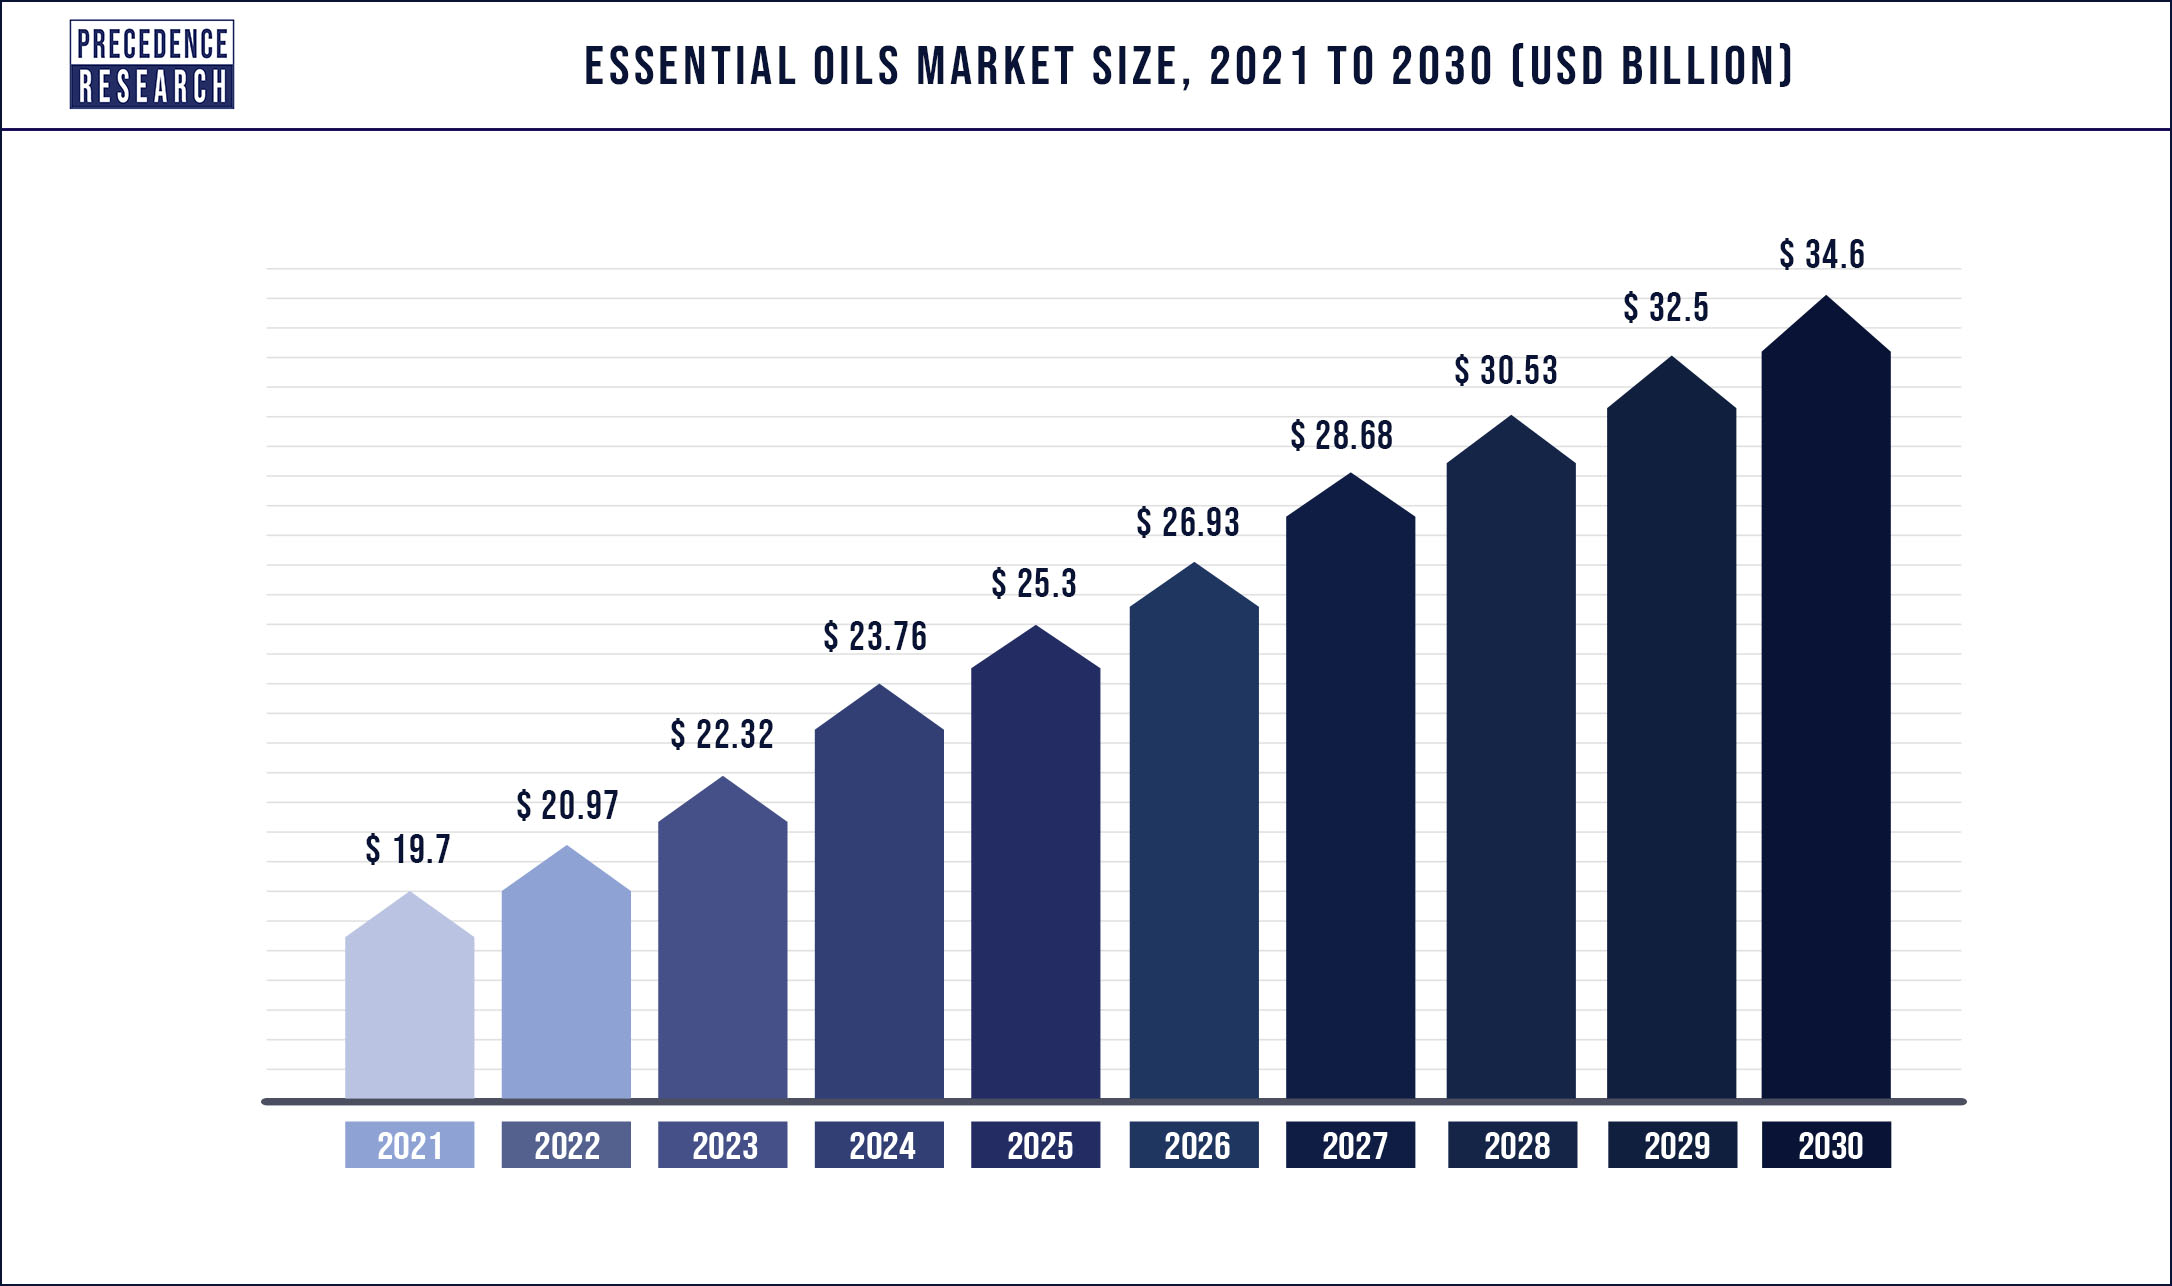 Essential Oils Market Size will Reach USD 34.6 Billion by 2030